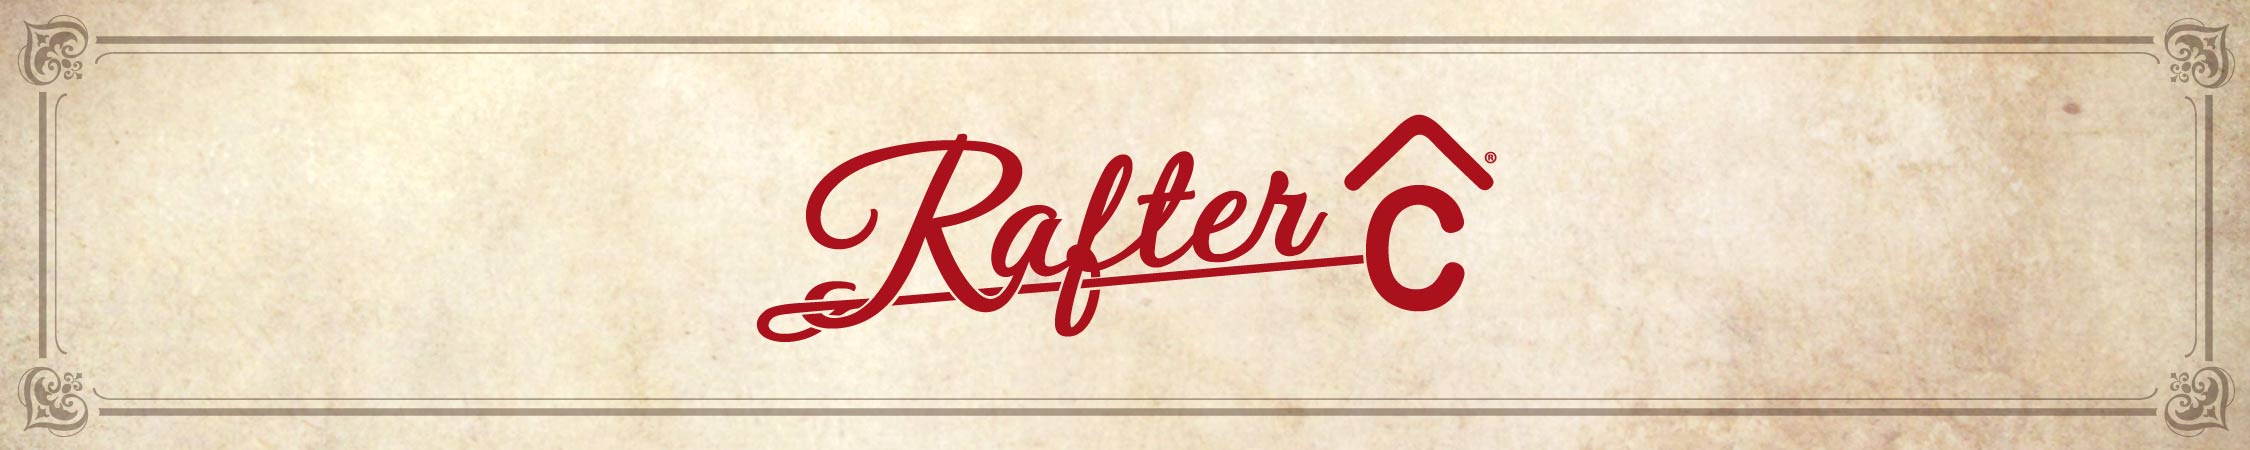 Cavender's Rafter C Brand header